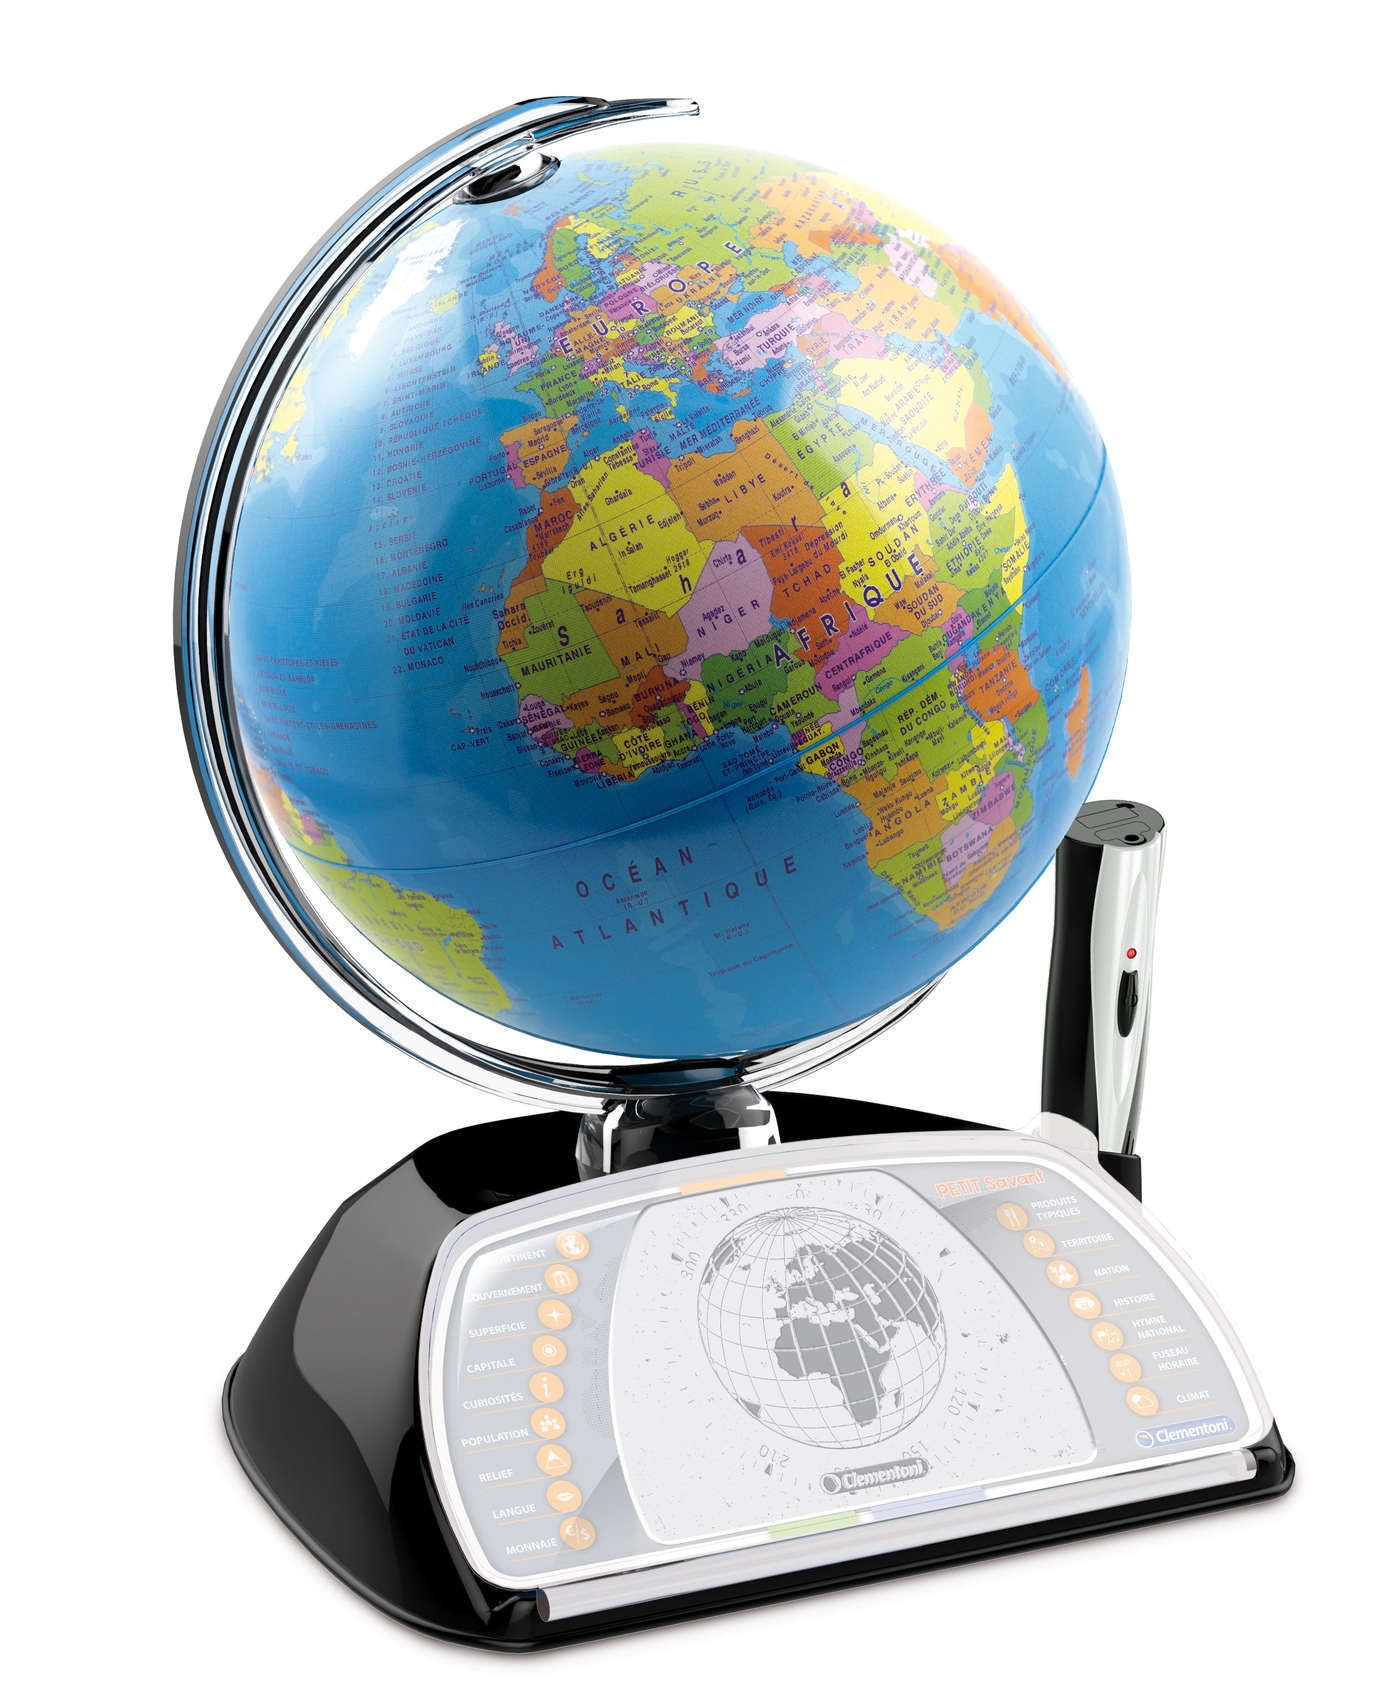 Le globe interactif « Exploraglobe » de Clementoni de Clementoni